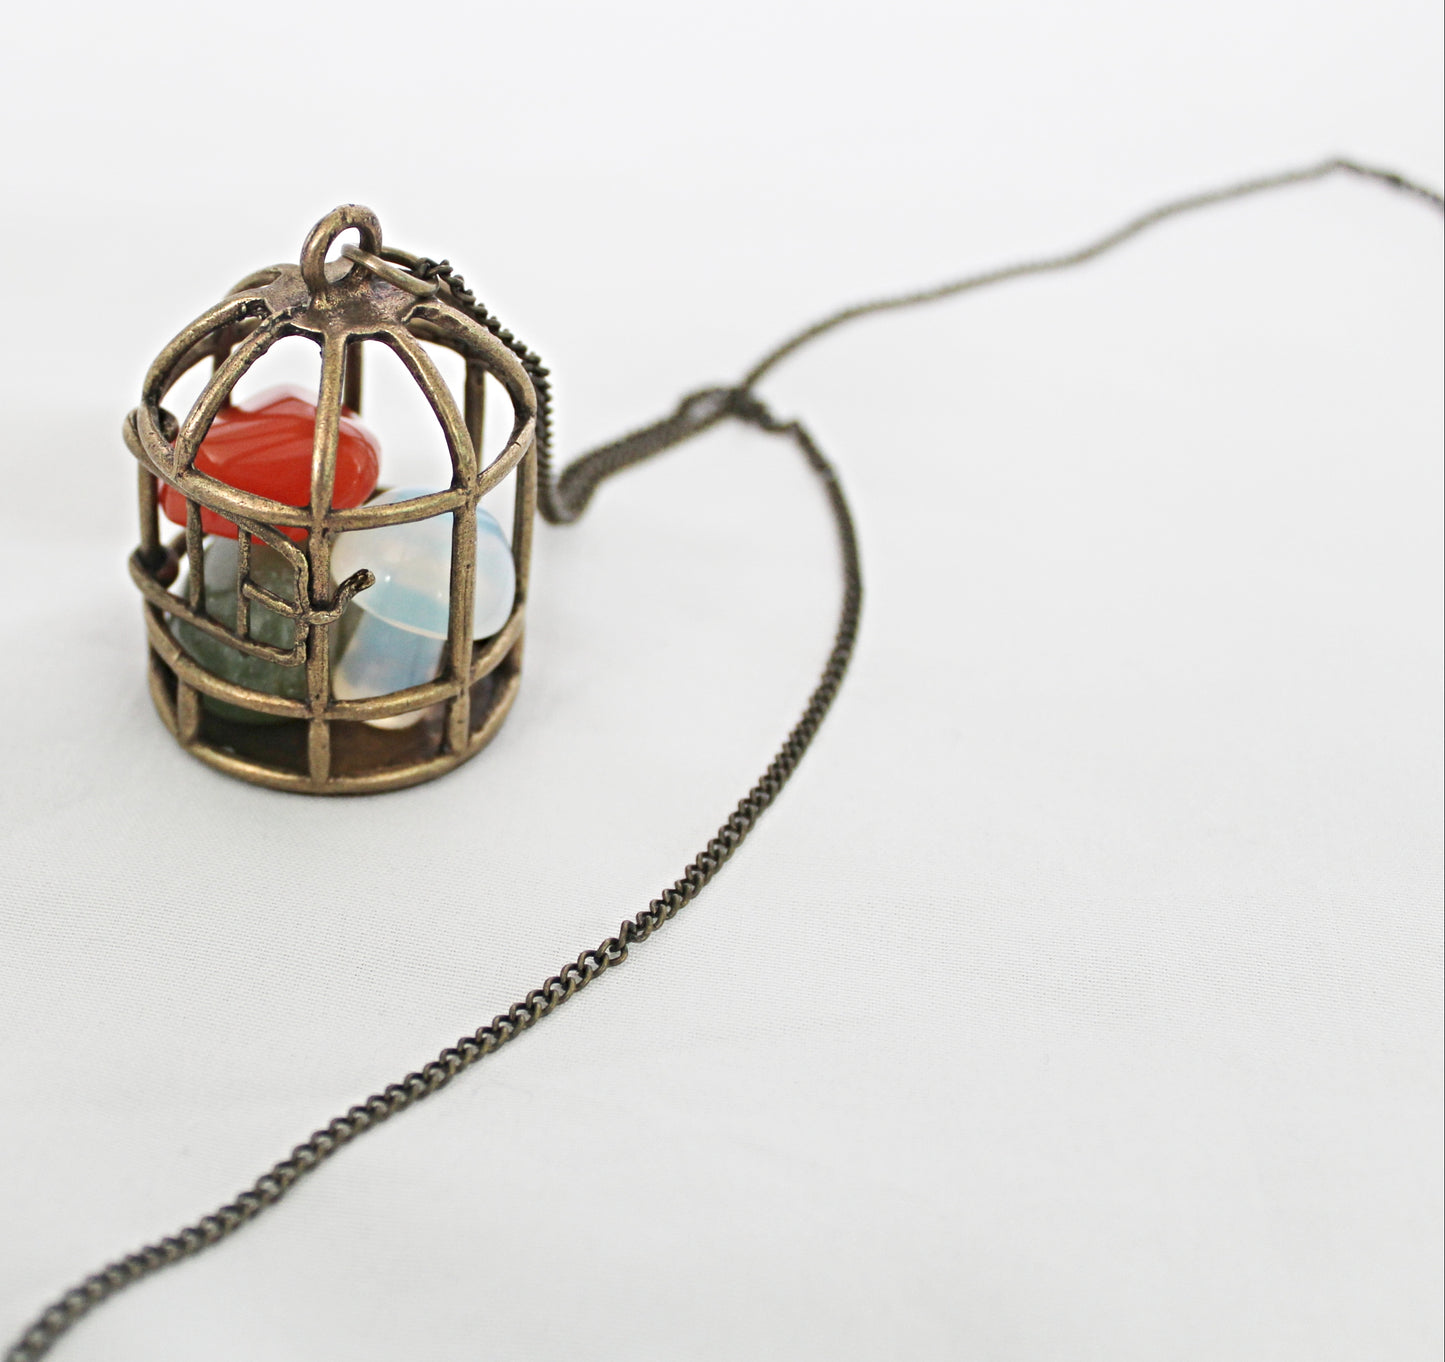 Birdcage Crystal Necklace featuring Mushroom Opalite, Carnelian, and Green Aventurine